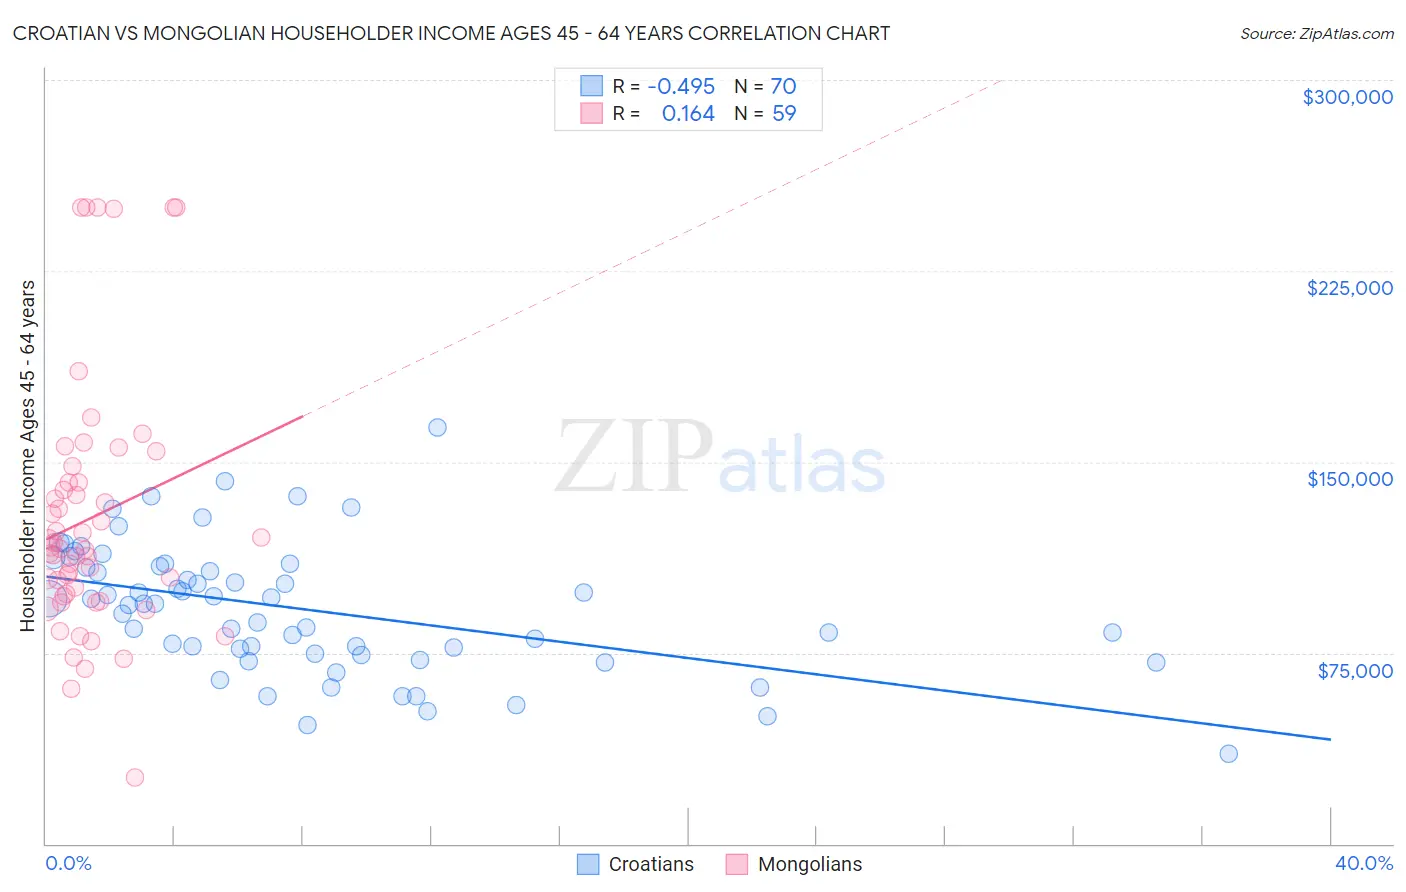 Croatian vs Mongolian Householder Income Ages 45 - 64 years